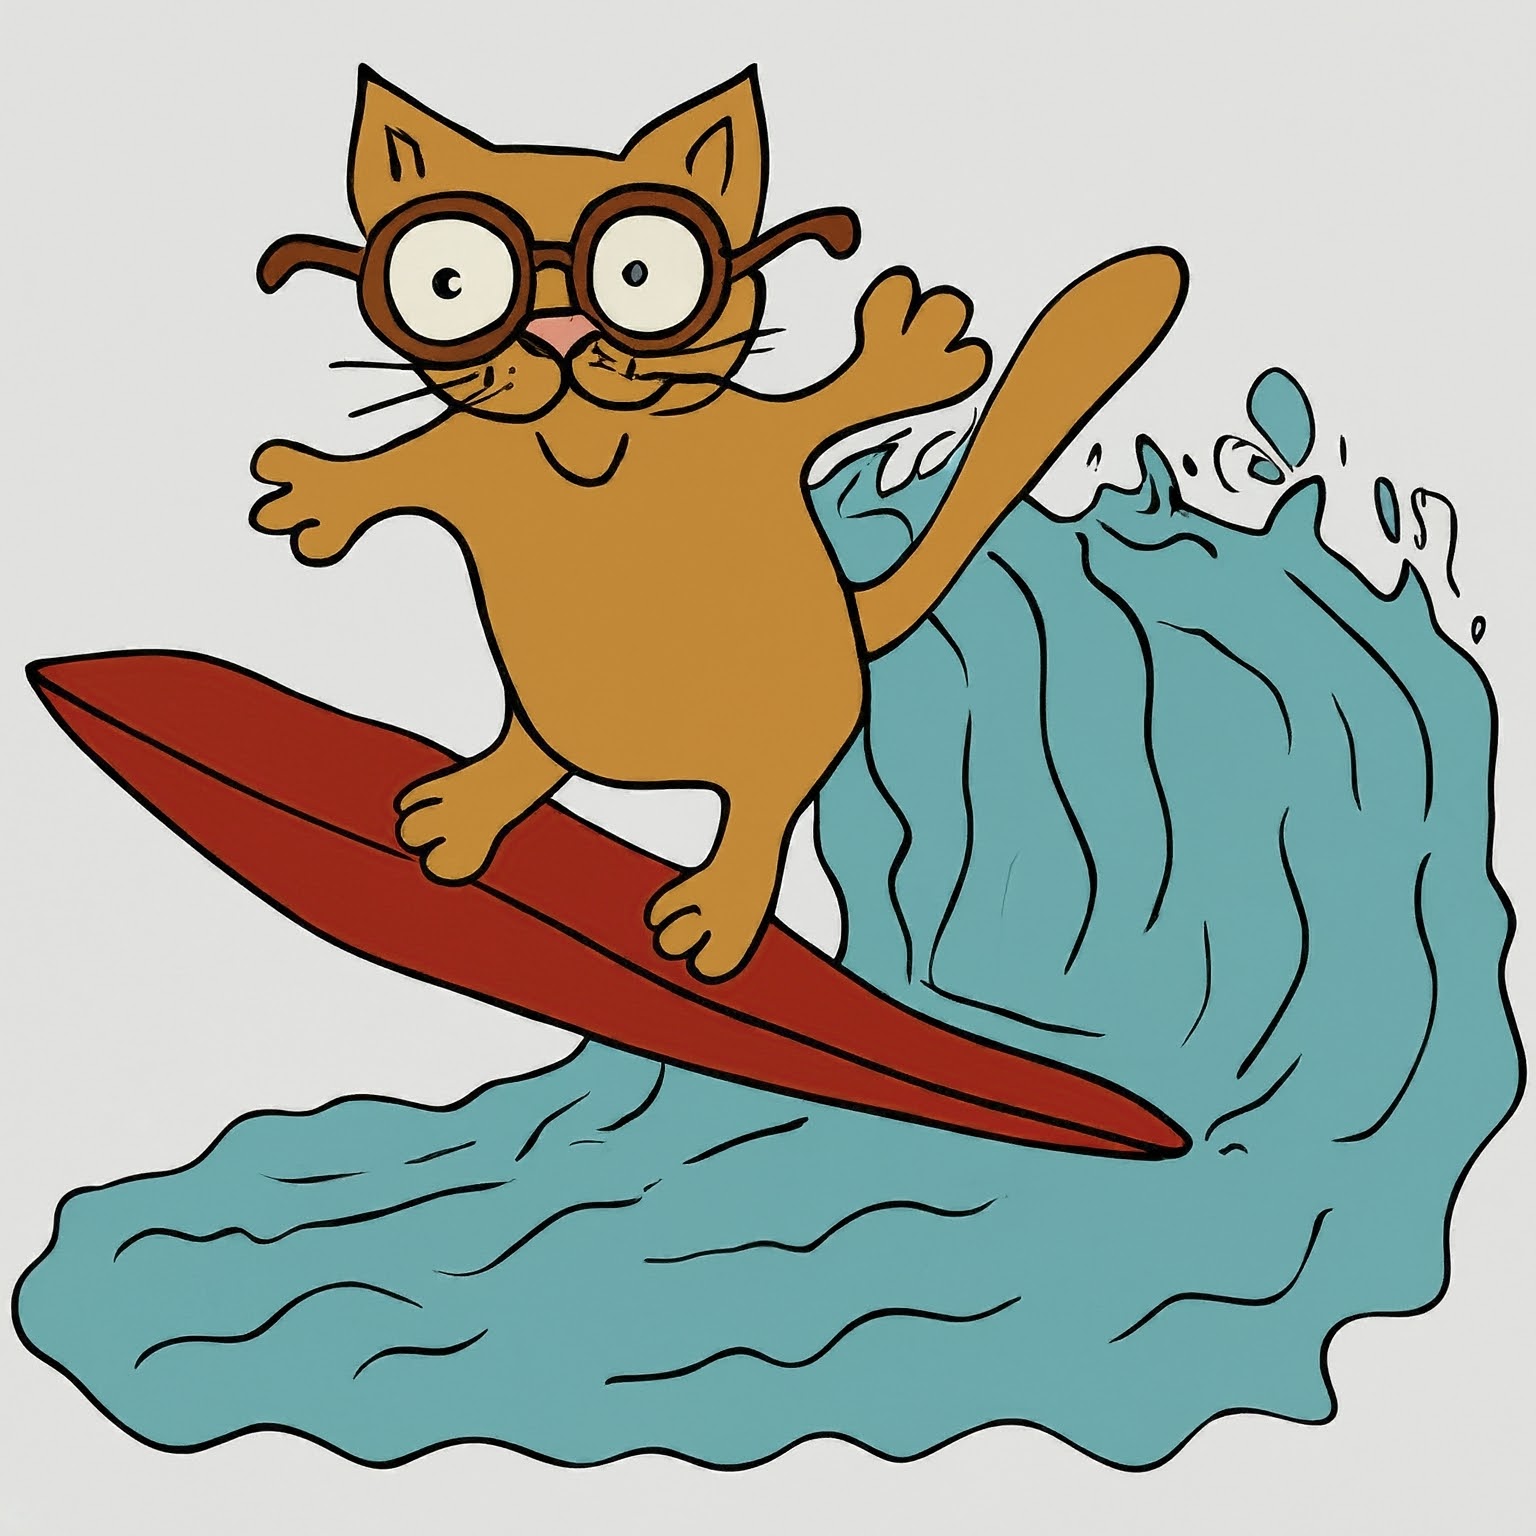 A Cartoon Cat Surfing A Wave On A Surfboard.